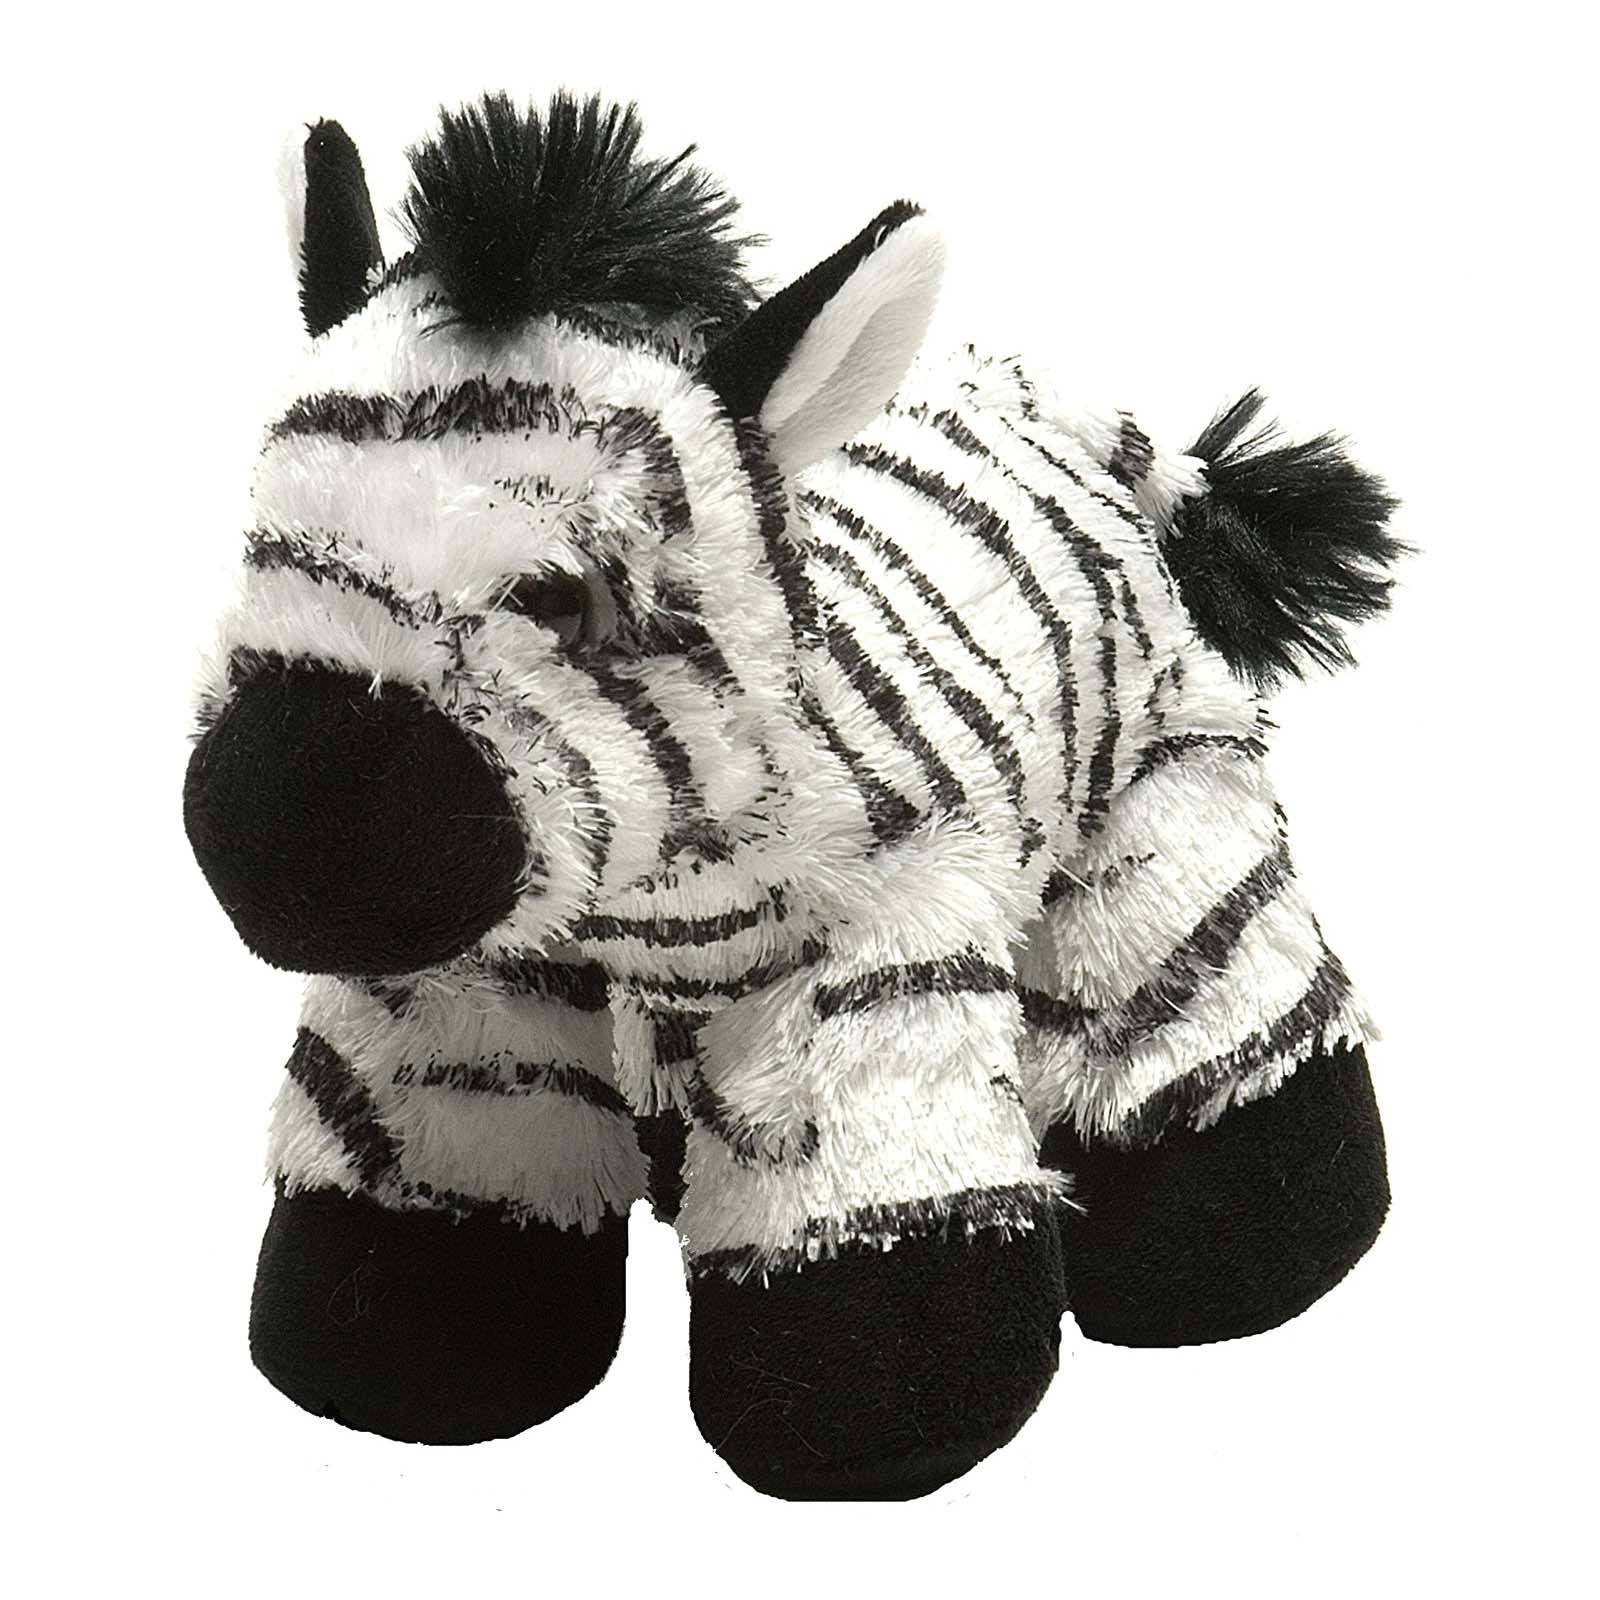 zebra soft toys for babies